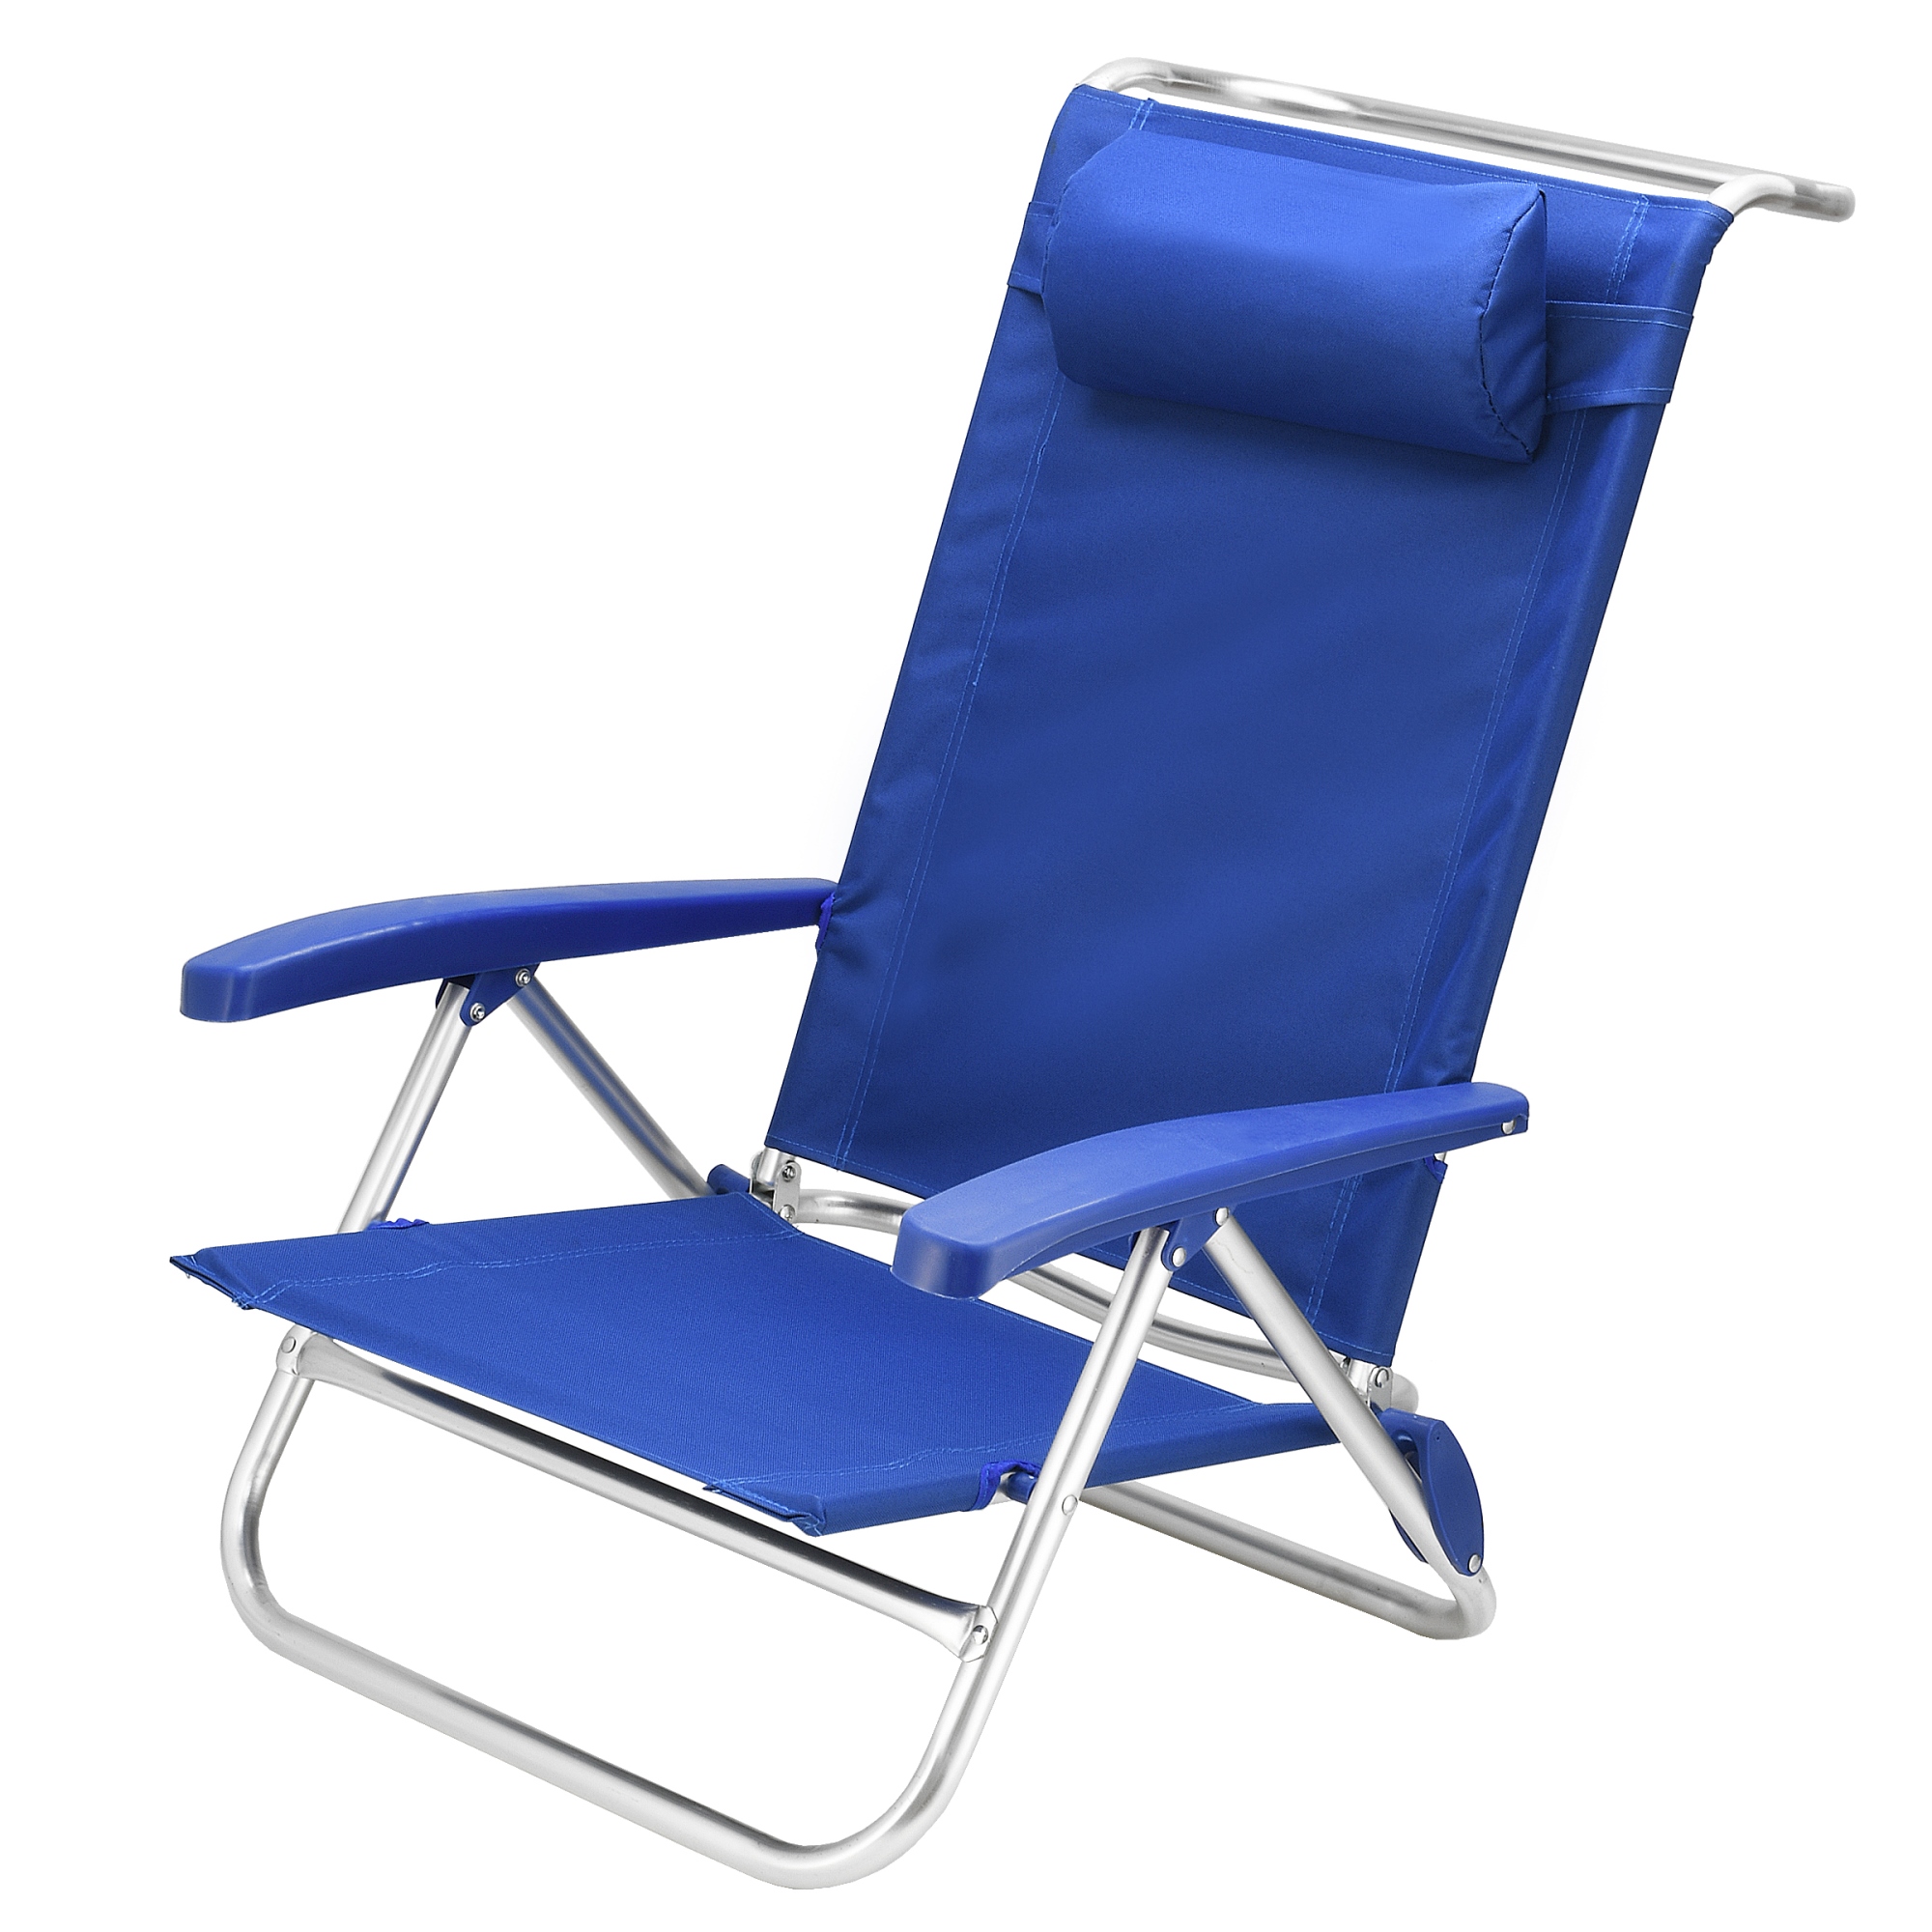 23" x 18.5" Cobalt Blue 5-Position Folding Beach Chair - image 1 of 3